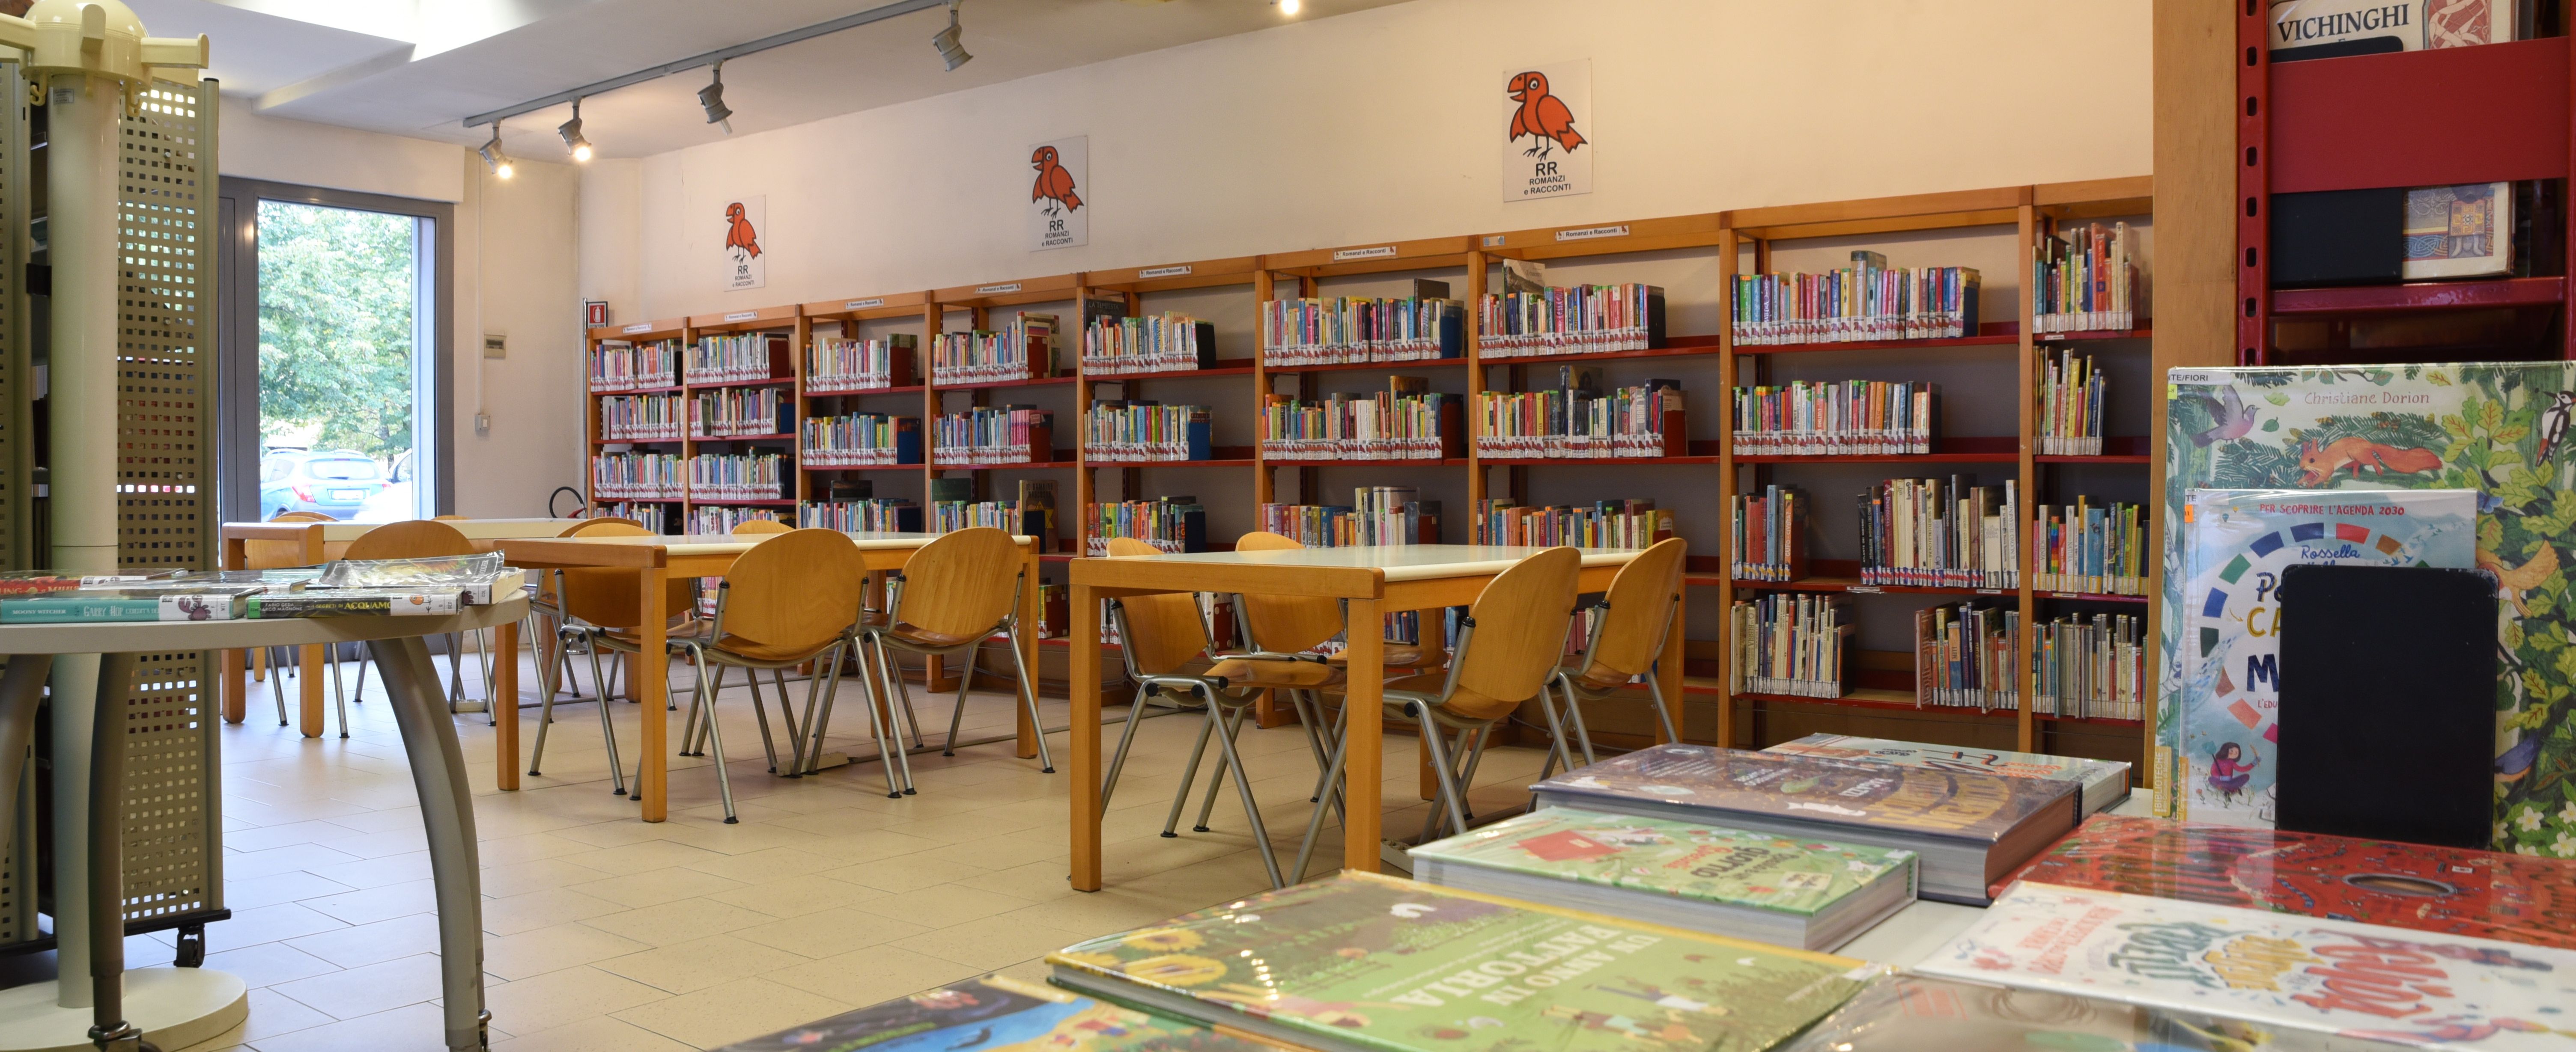 Biblioteca Rotonda